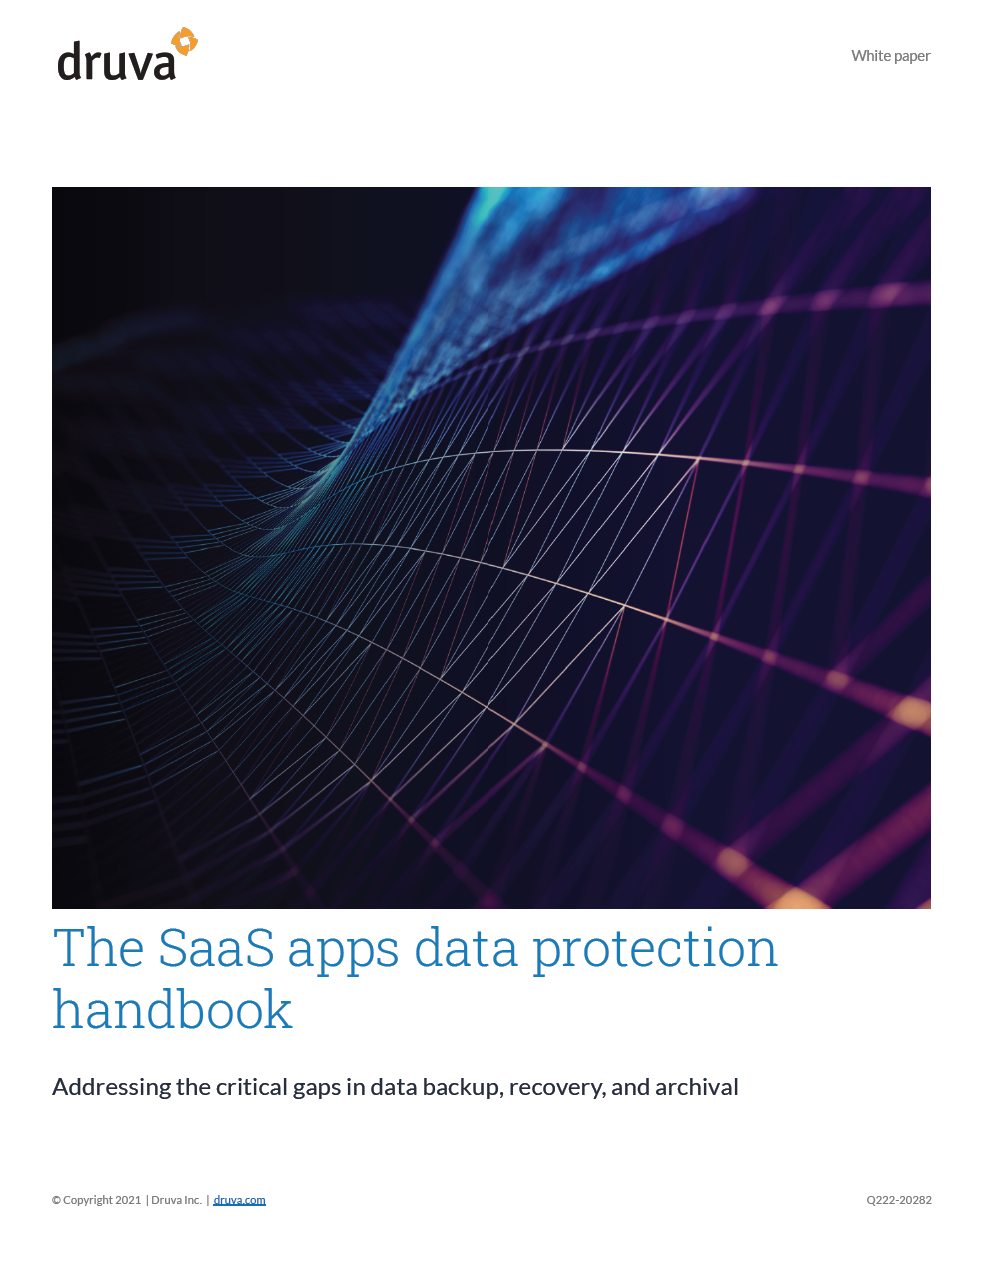 The SaaS apps data protection handbook